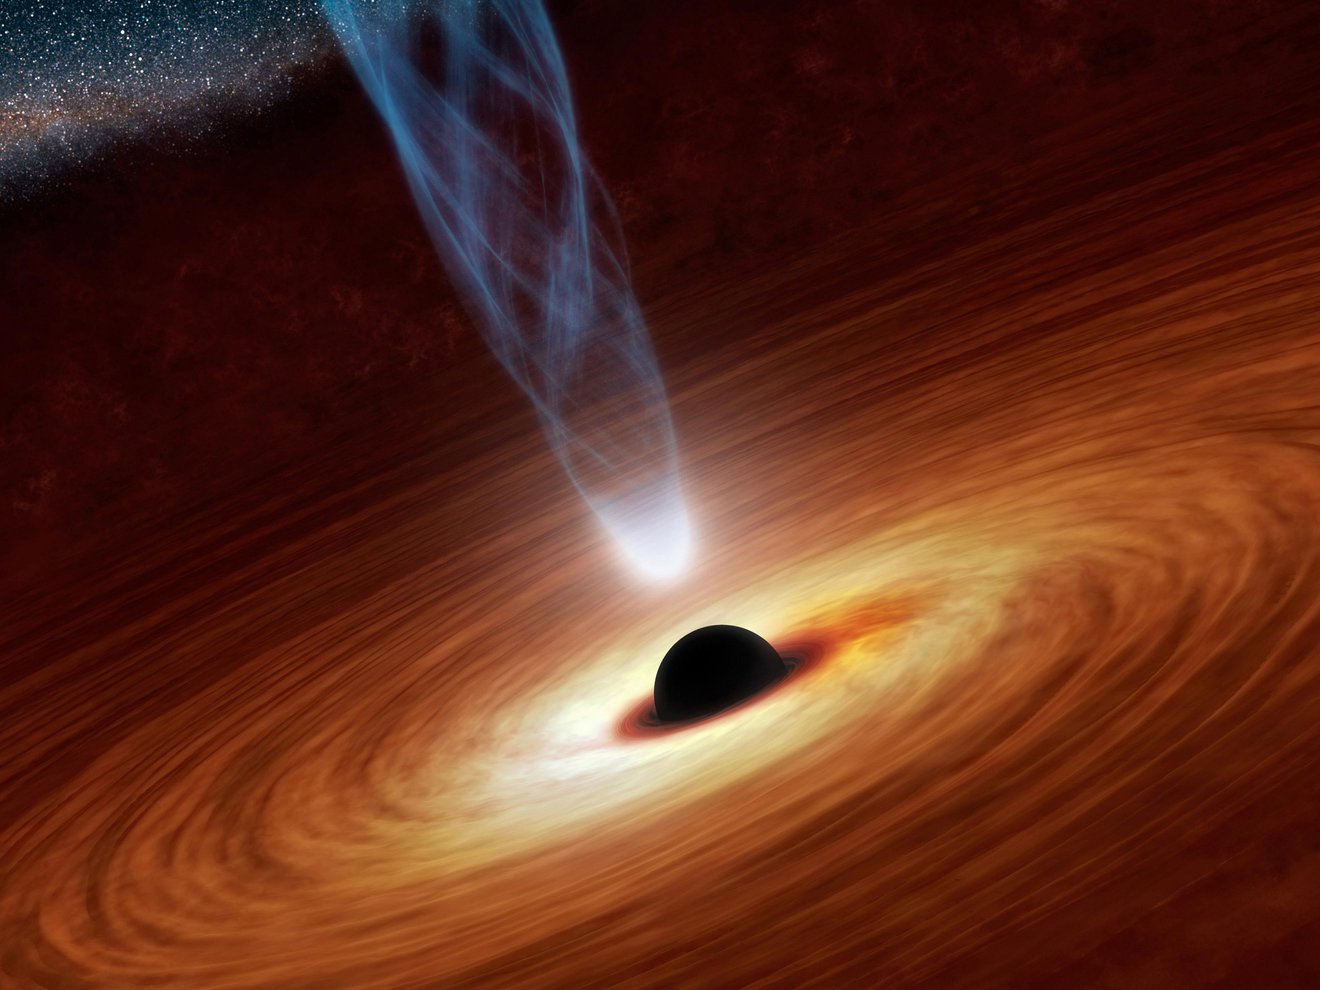 Massive feeding black hole